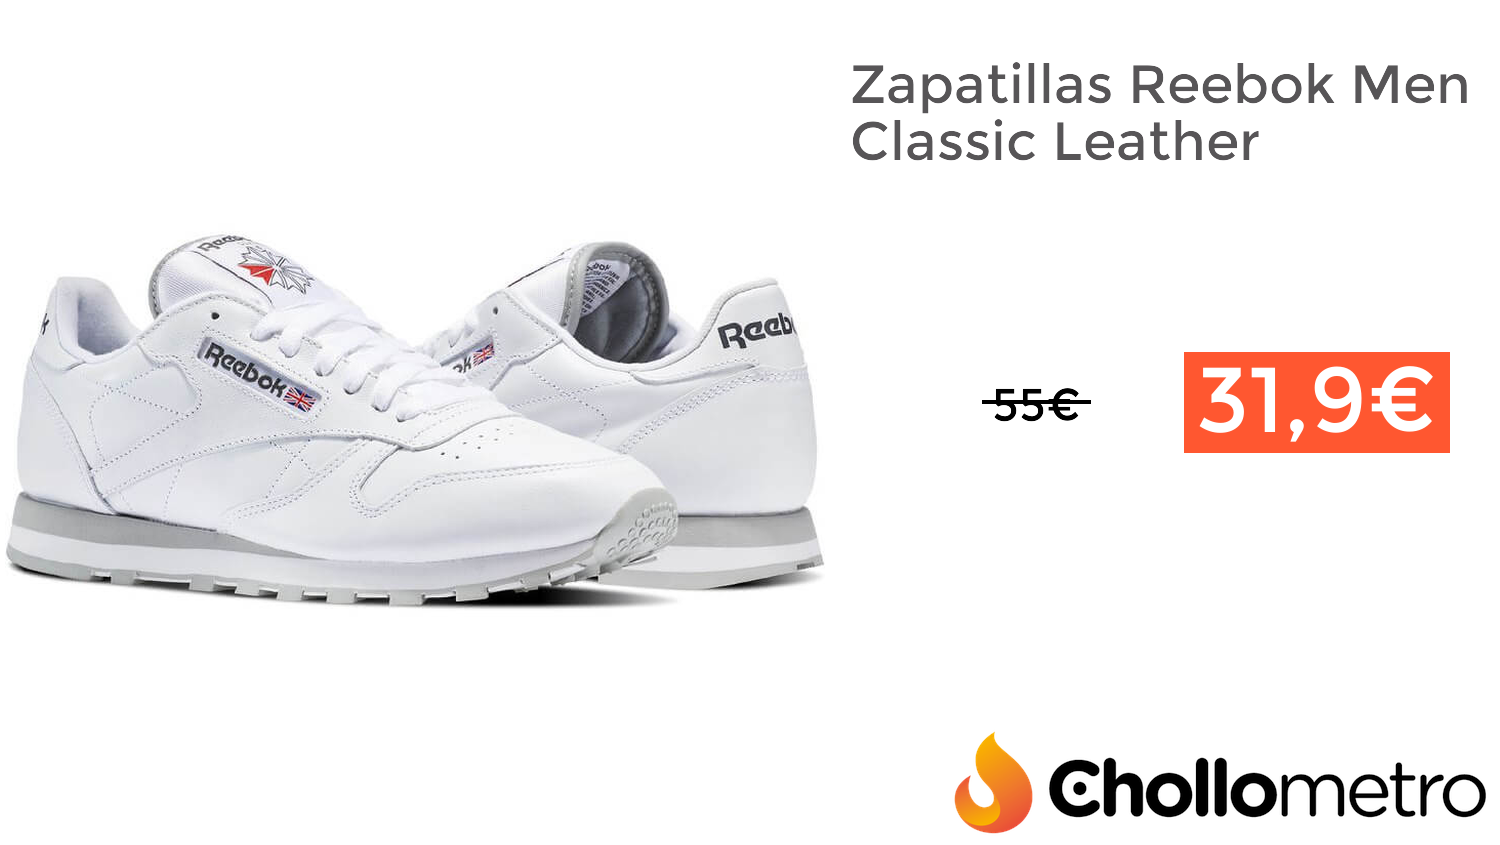 Chollometro Twitter: "#CHOLLO Zapatillas Reebok Men Classic Leather por 31,9€ ➡️ https://t.co/Mo2EyjGv7H https://t.co/cFIlN0vbzv"